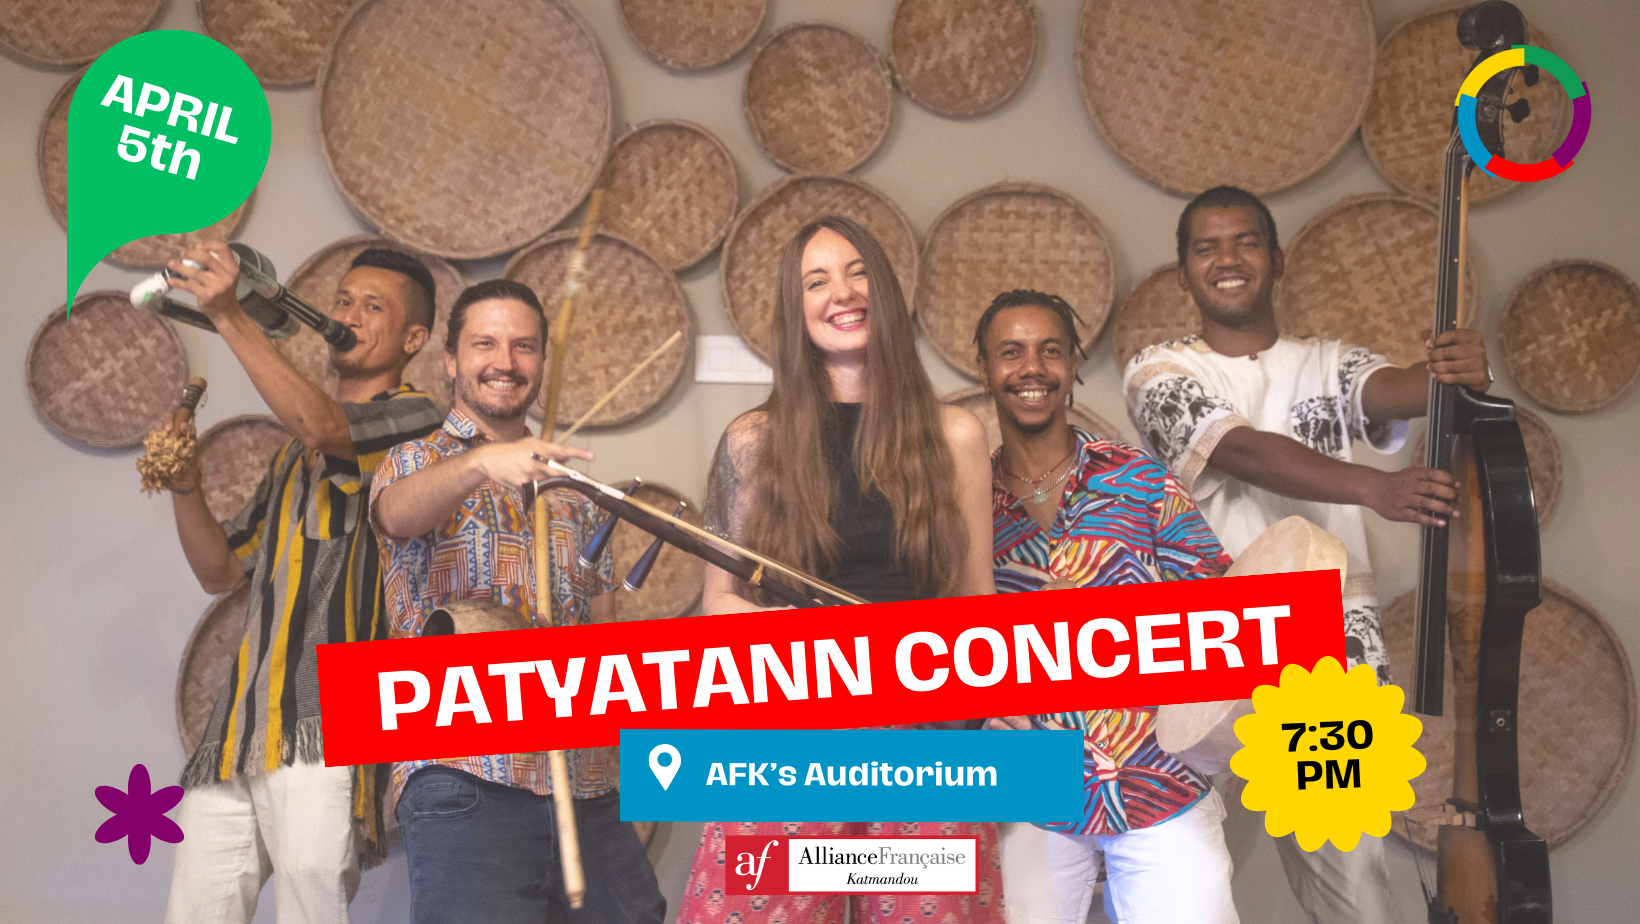 Patyatann Concert